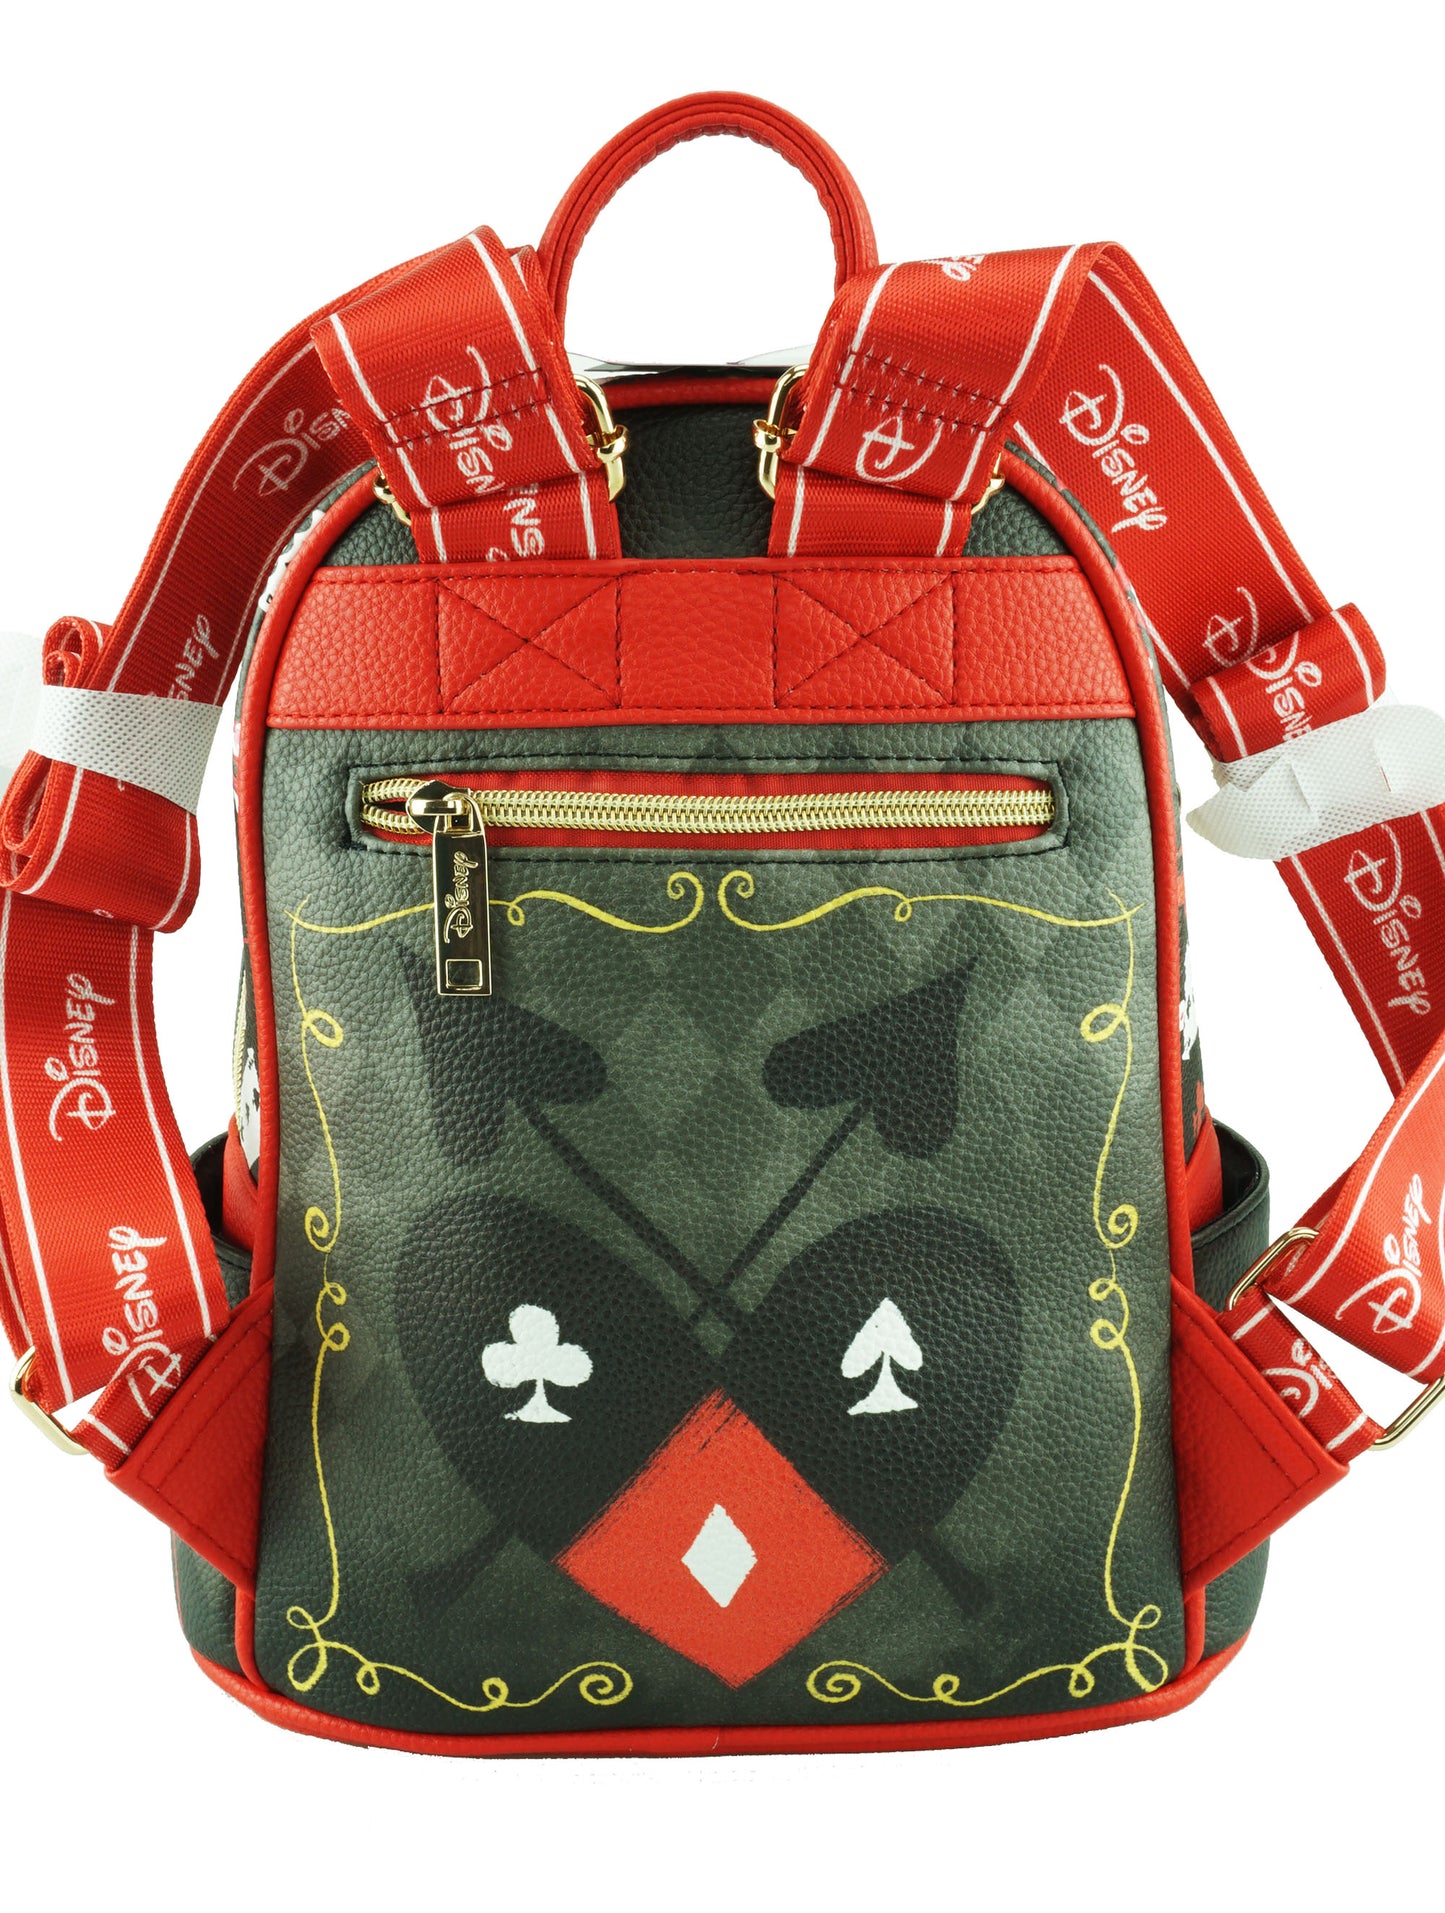 New Villains - Ursula - Wondapop 11 inch Vegan Leather Mini Backpack